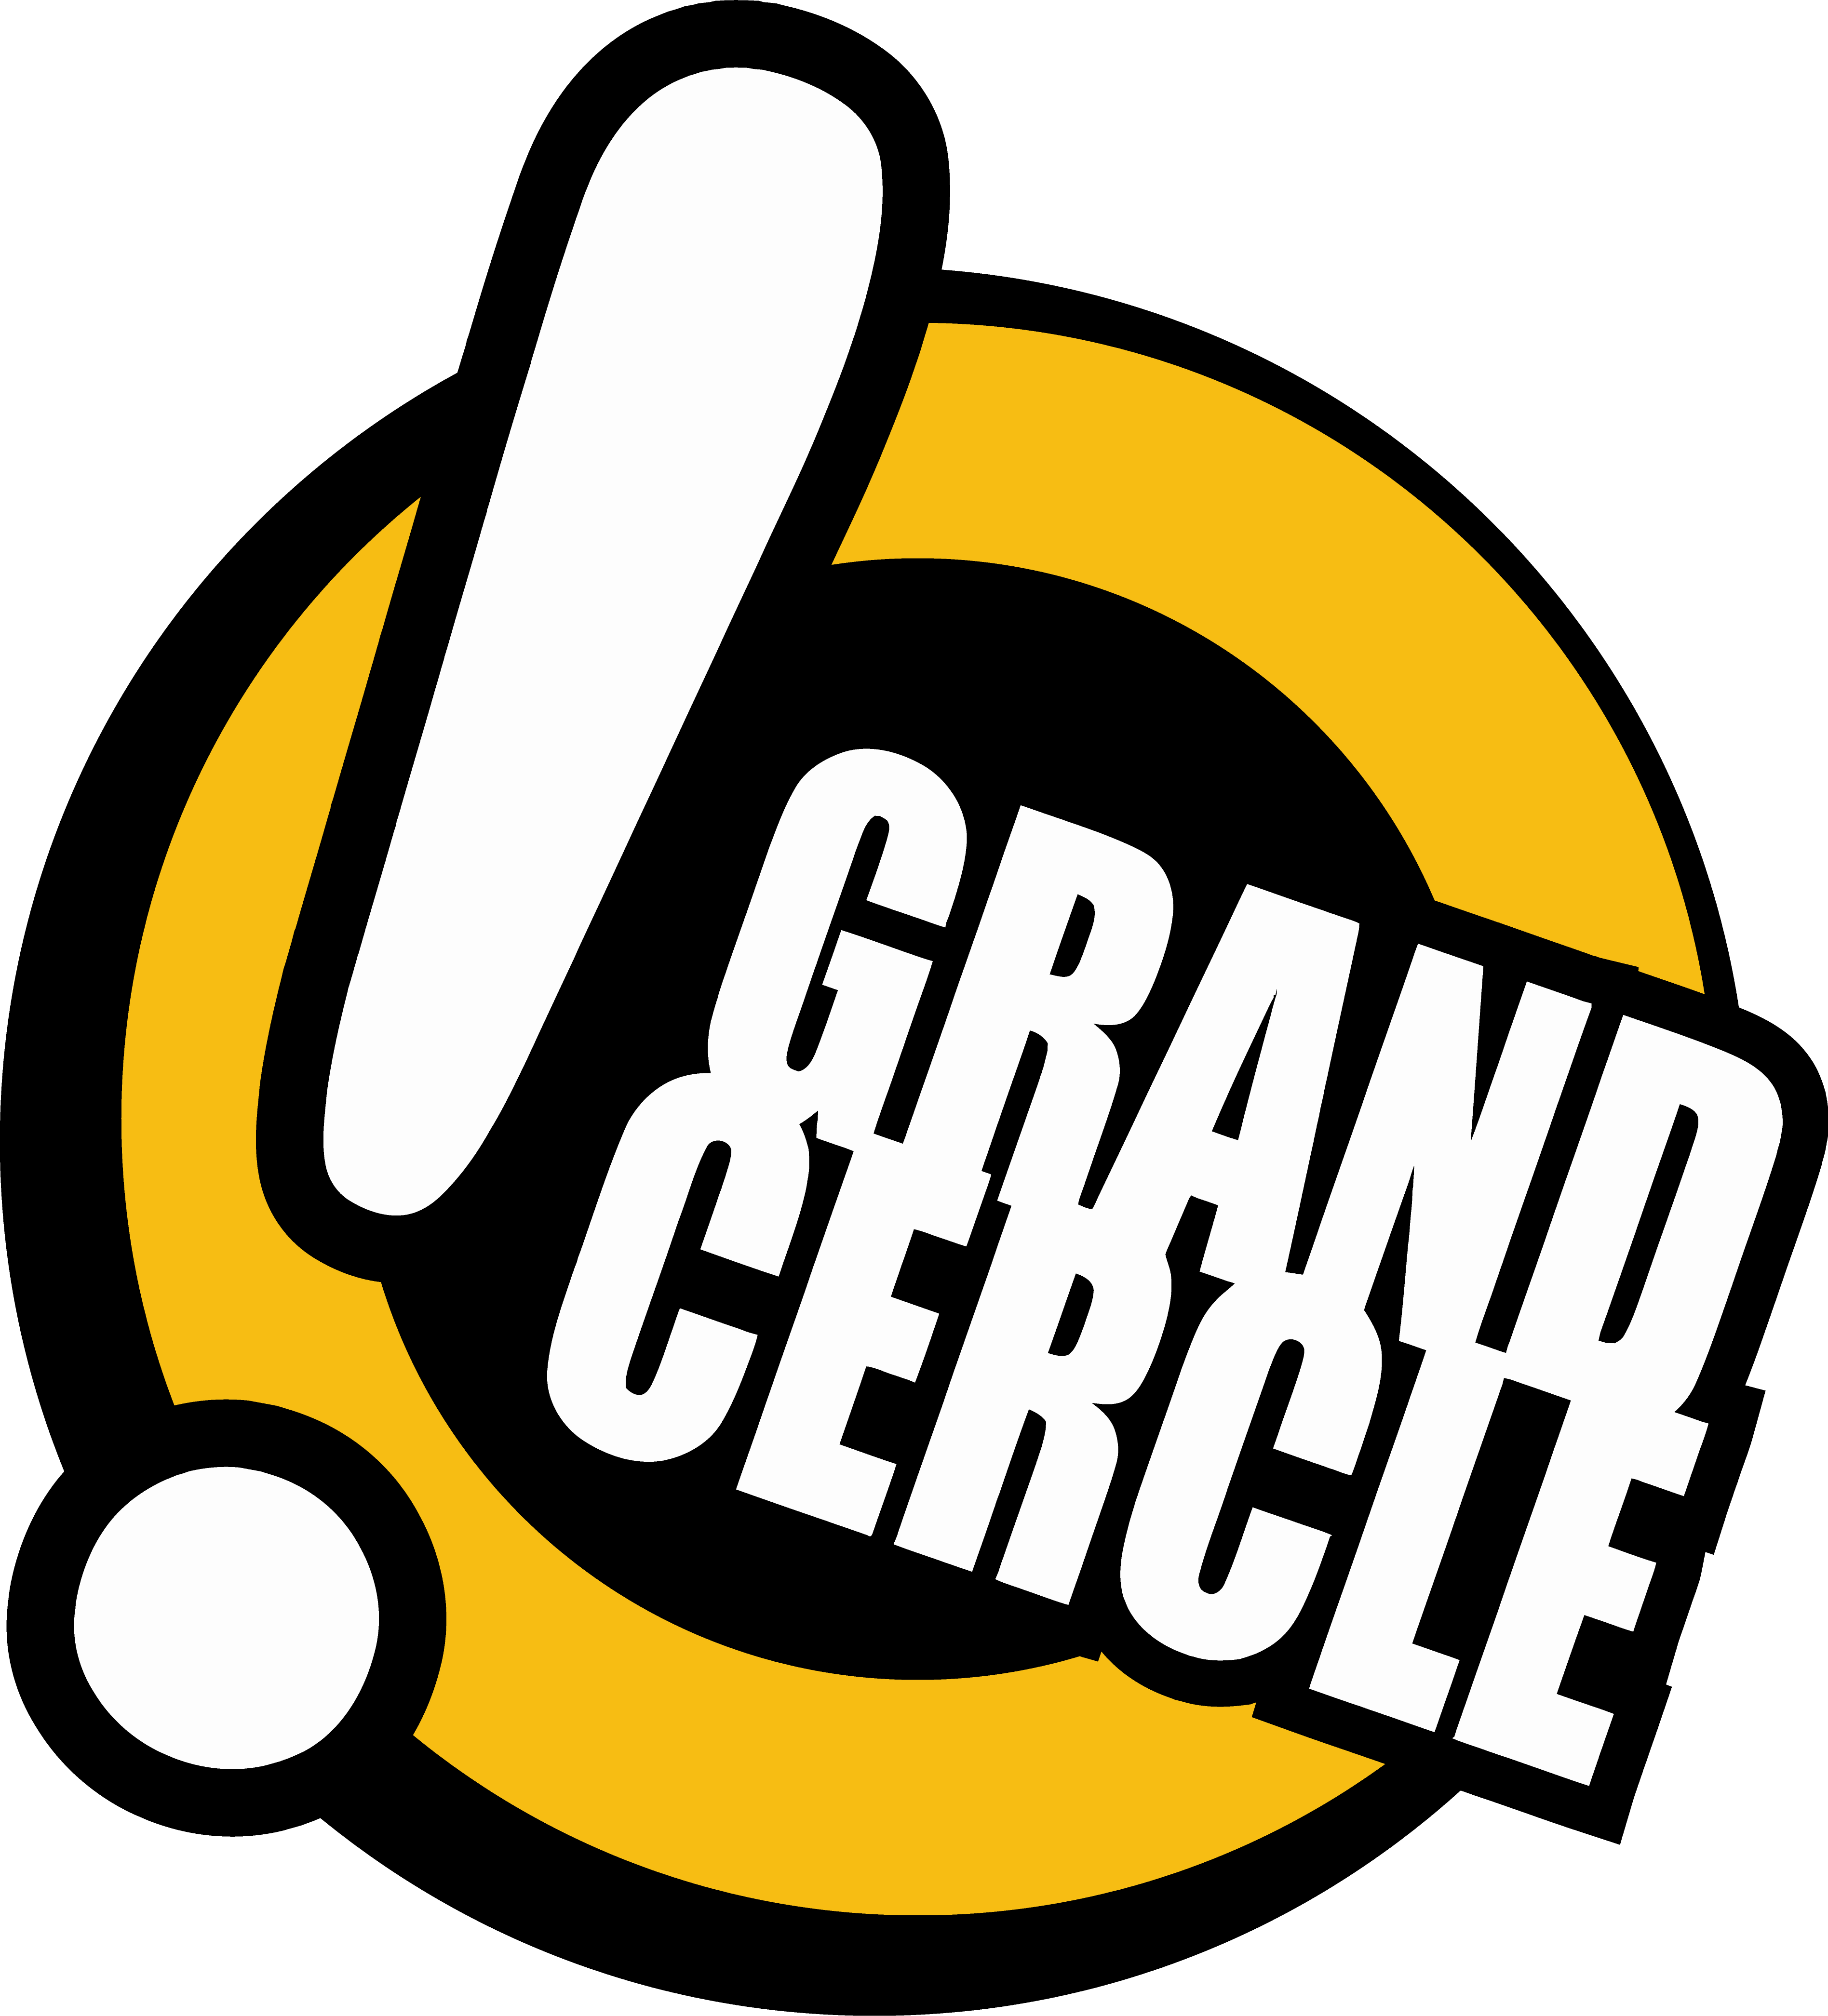 Grand Cercle